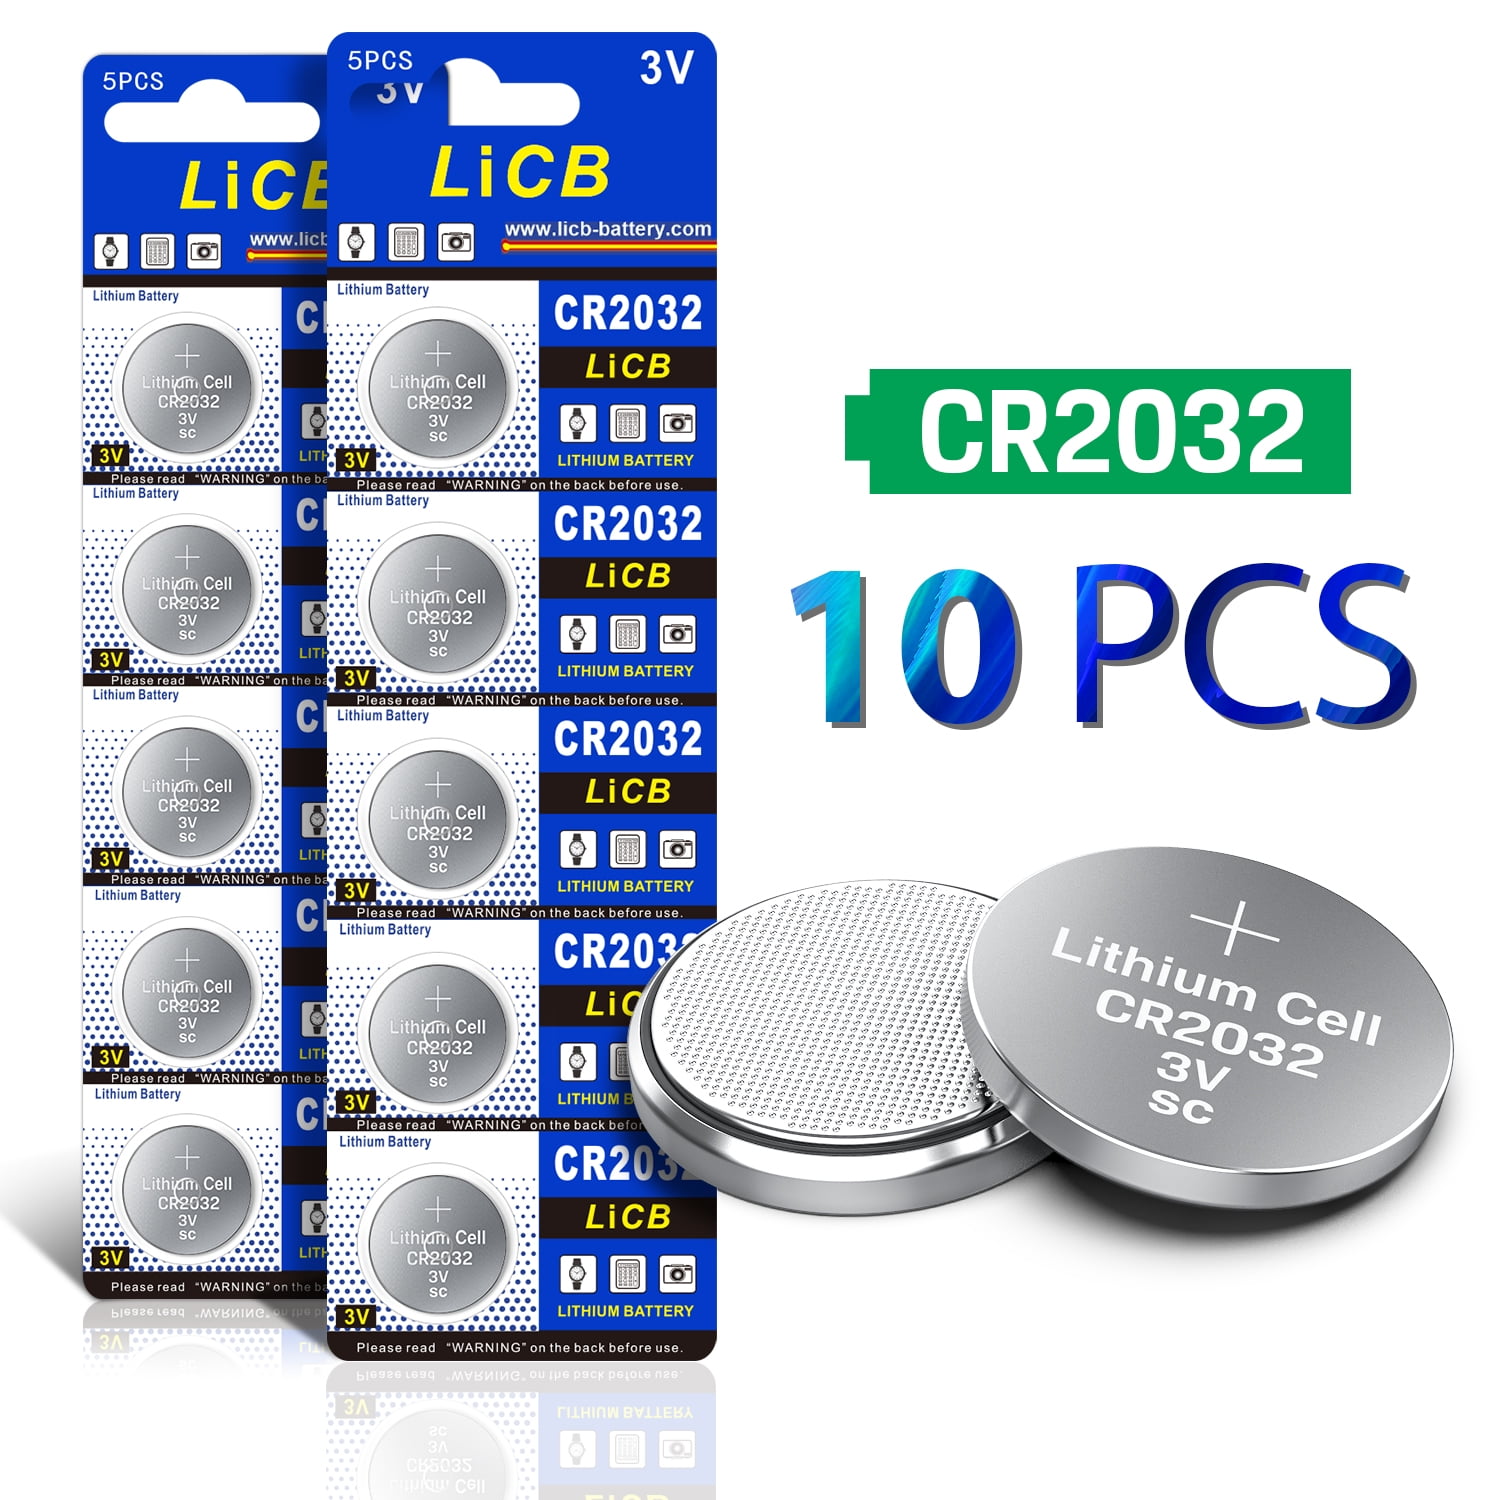 Cr2032 batteries. Батарейка cr2032 (3v). Lithium Cell cr2032 3v SC. Lithium cr2032. Cr2032 Lithium Cell 3v.